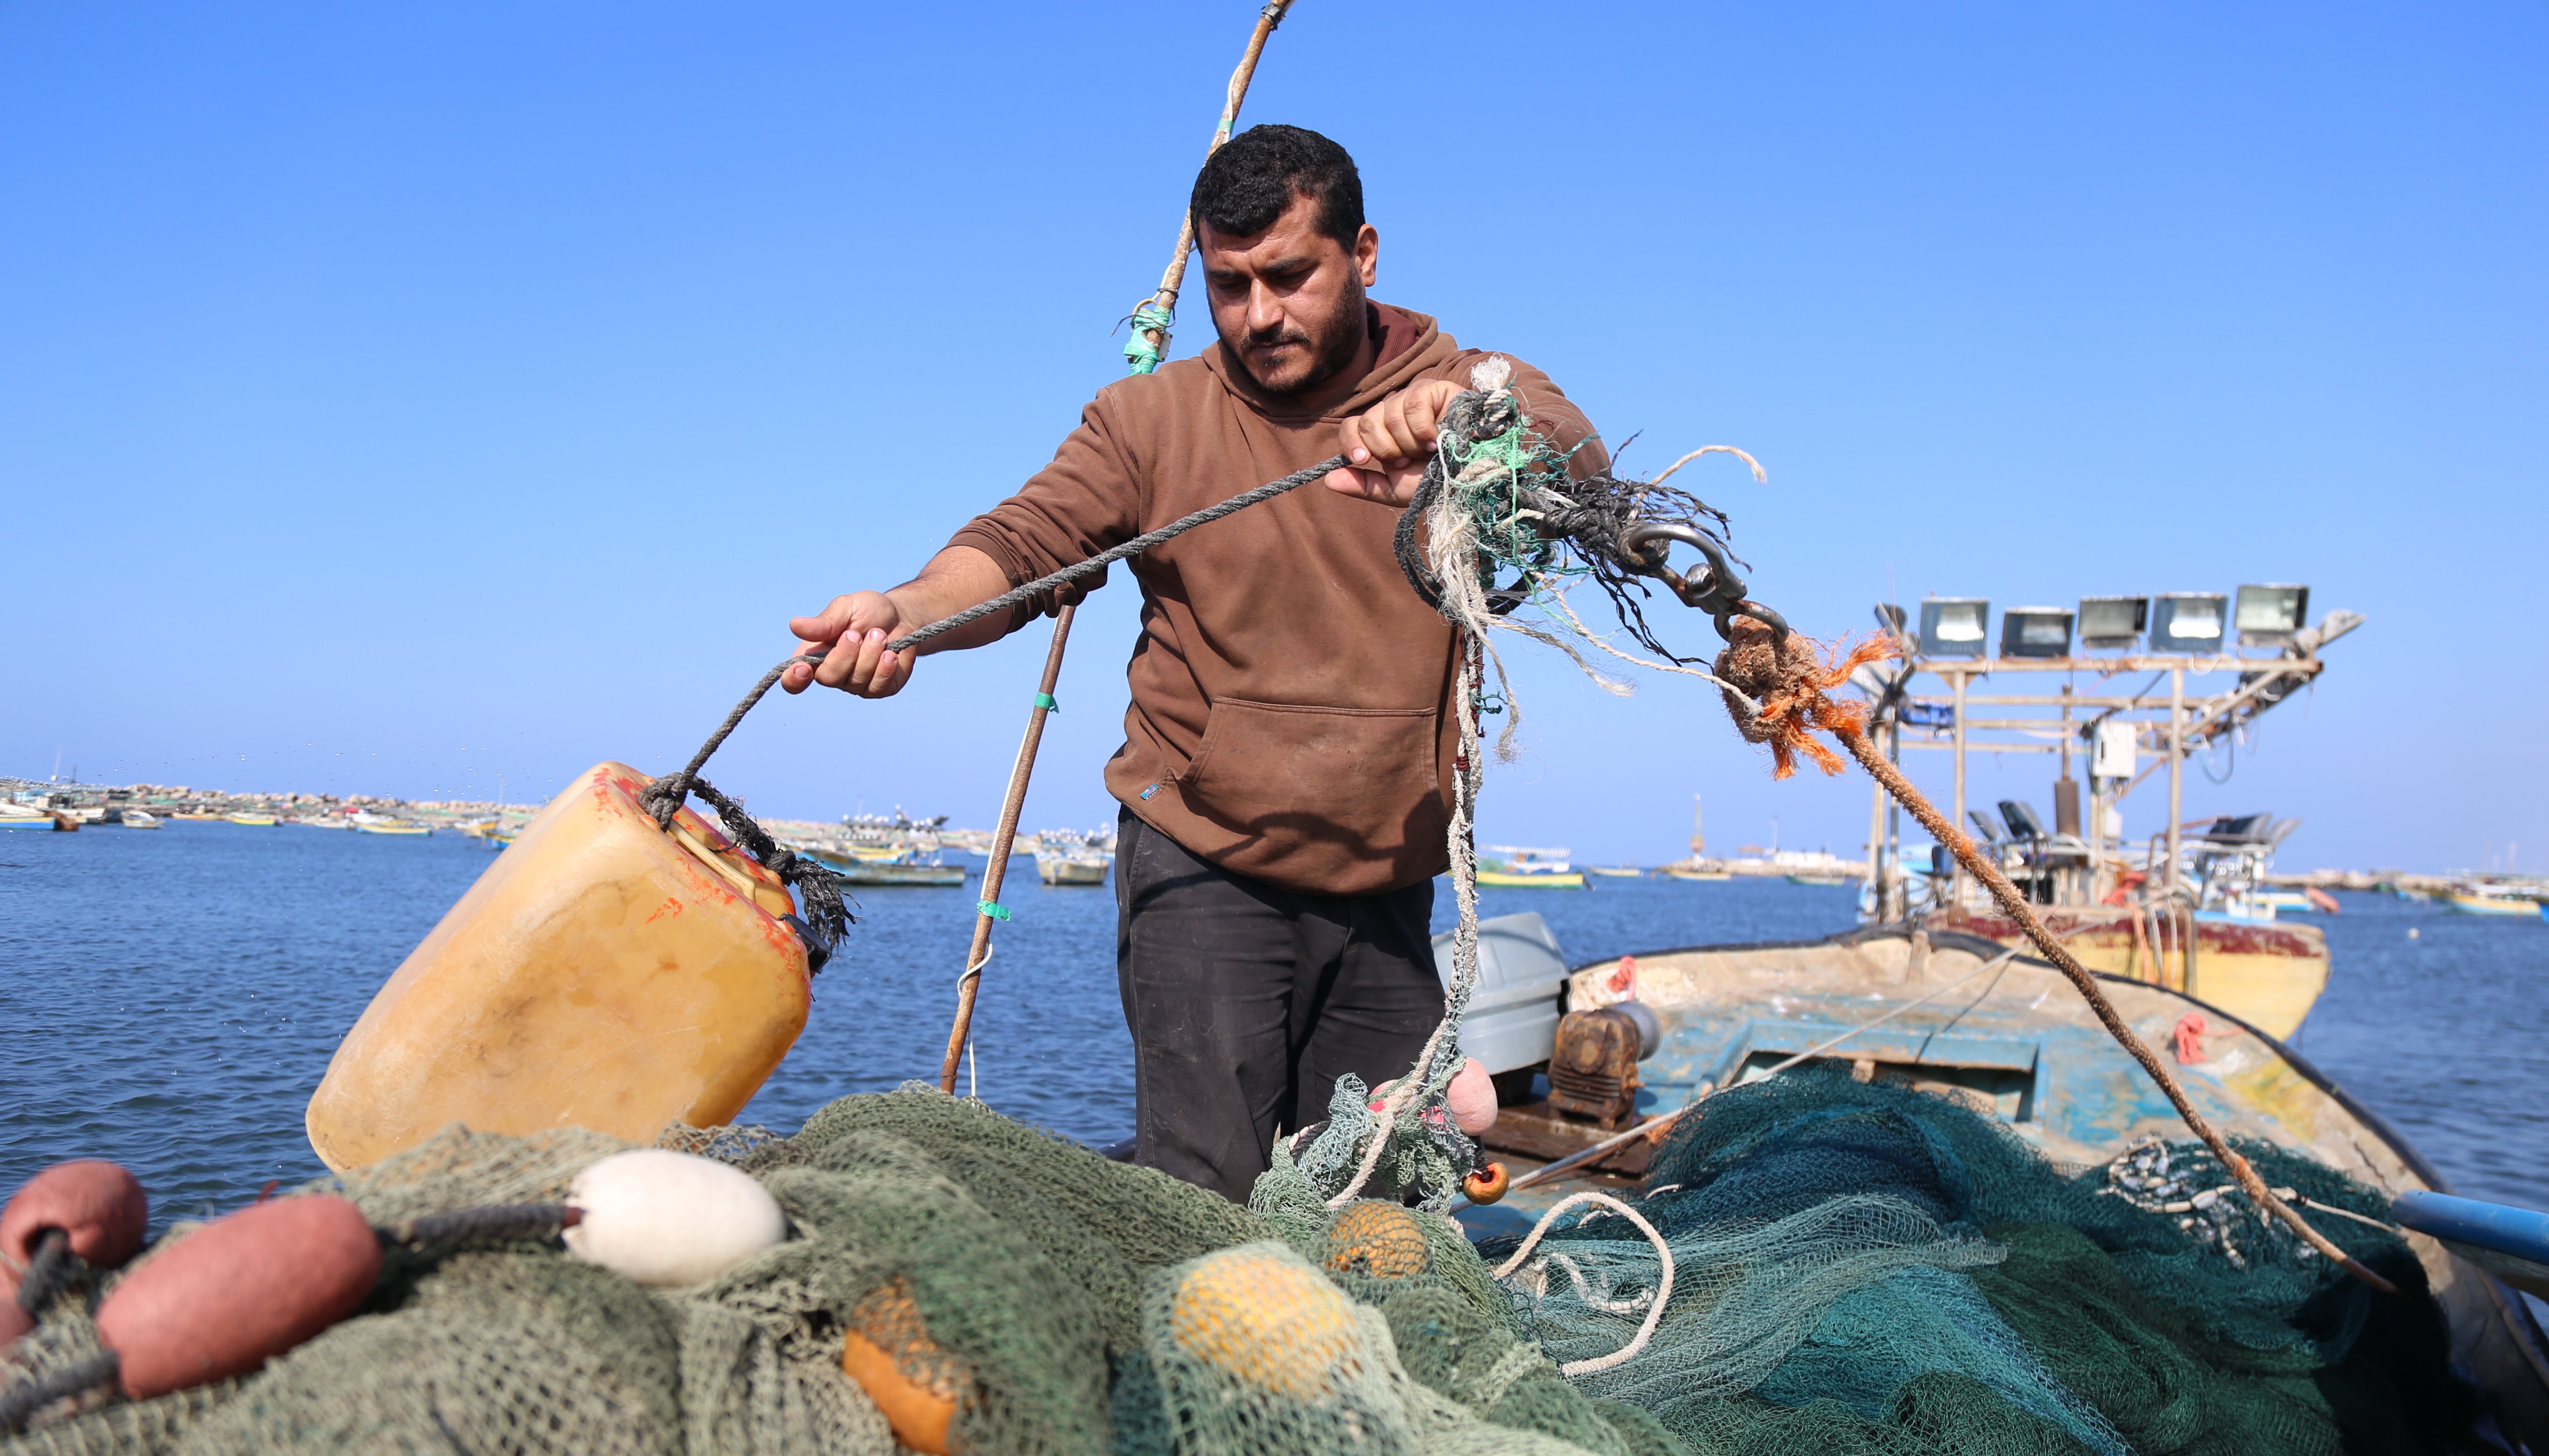 Read FISHING UNDER BLOCKADE by Oxfam International